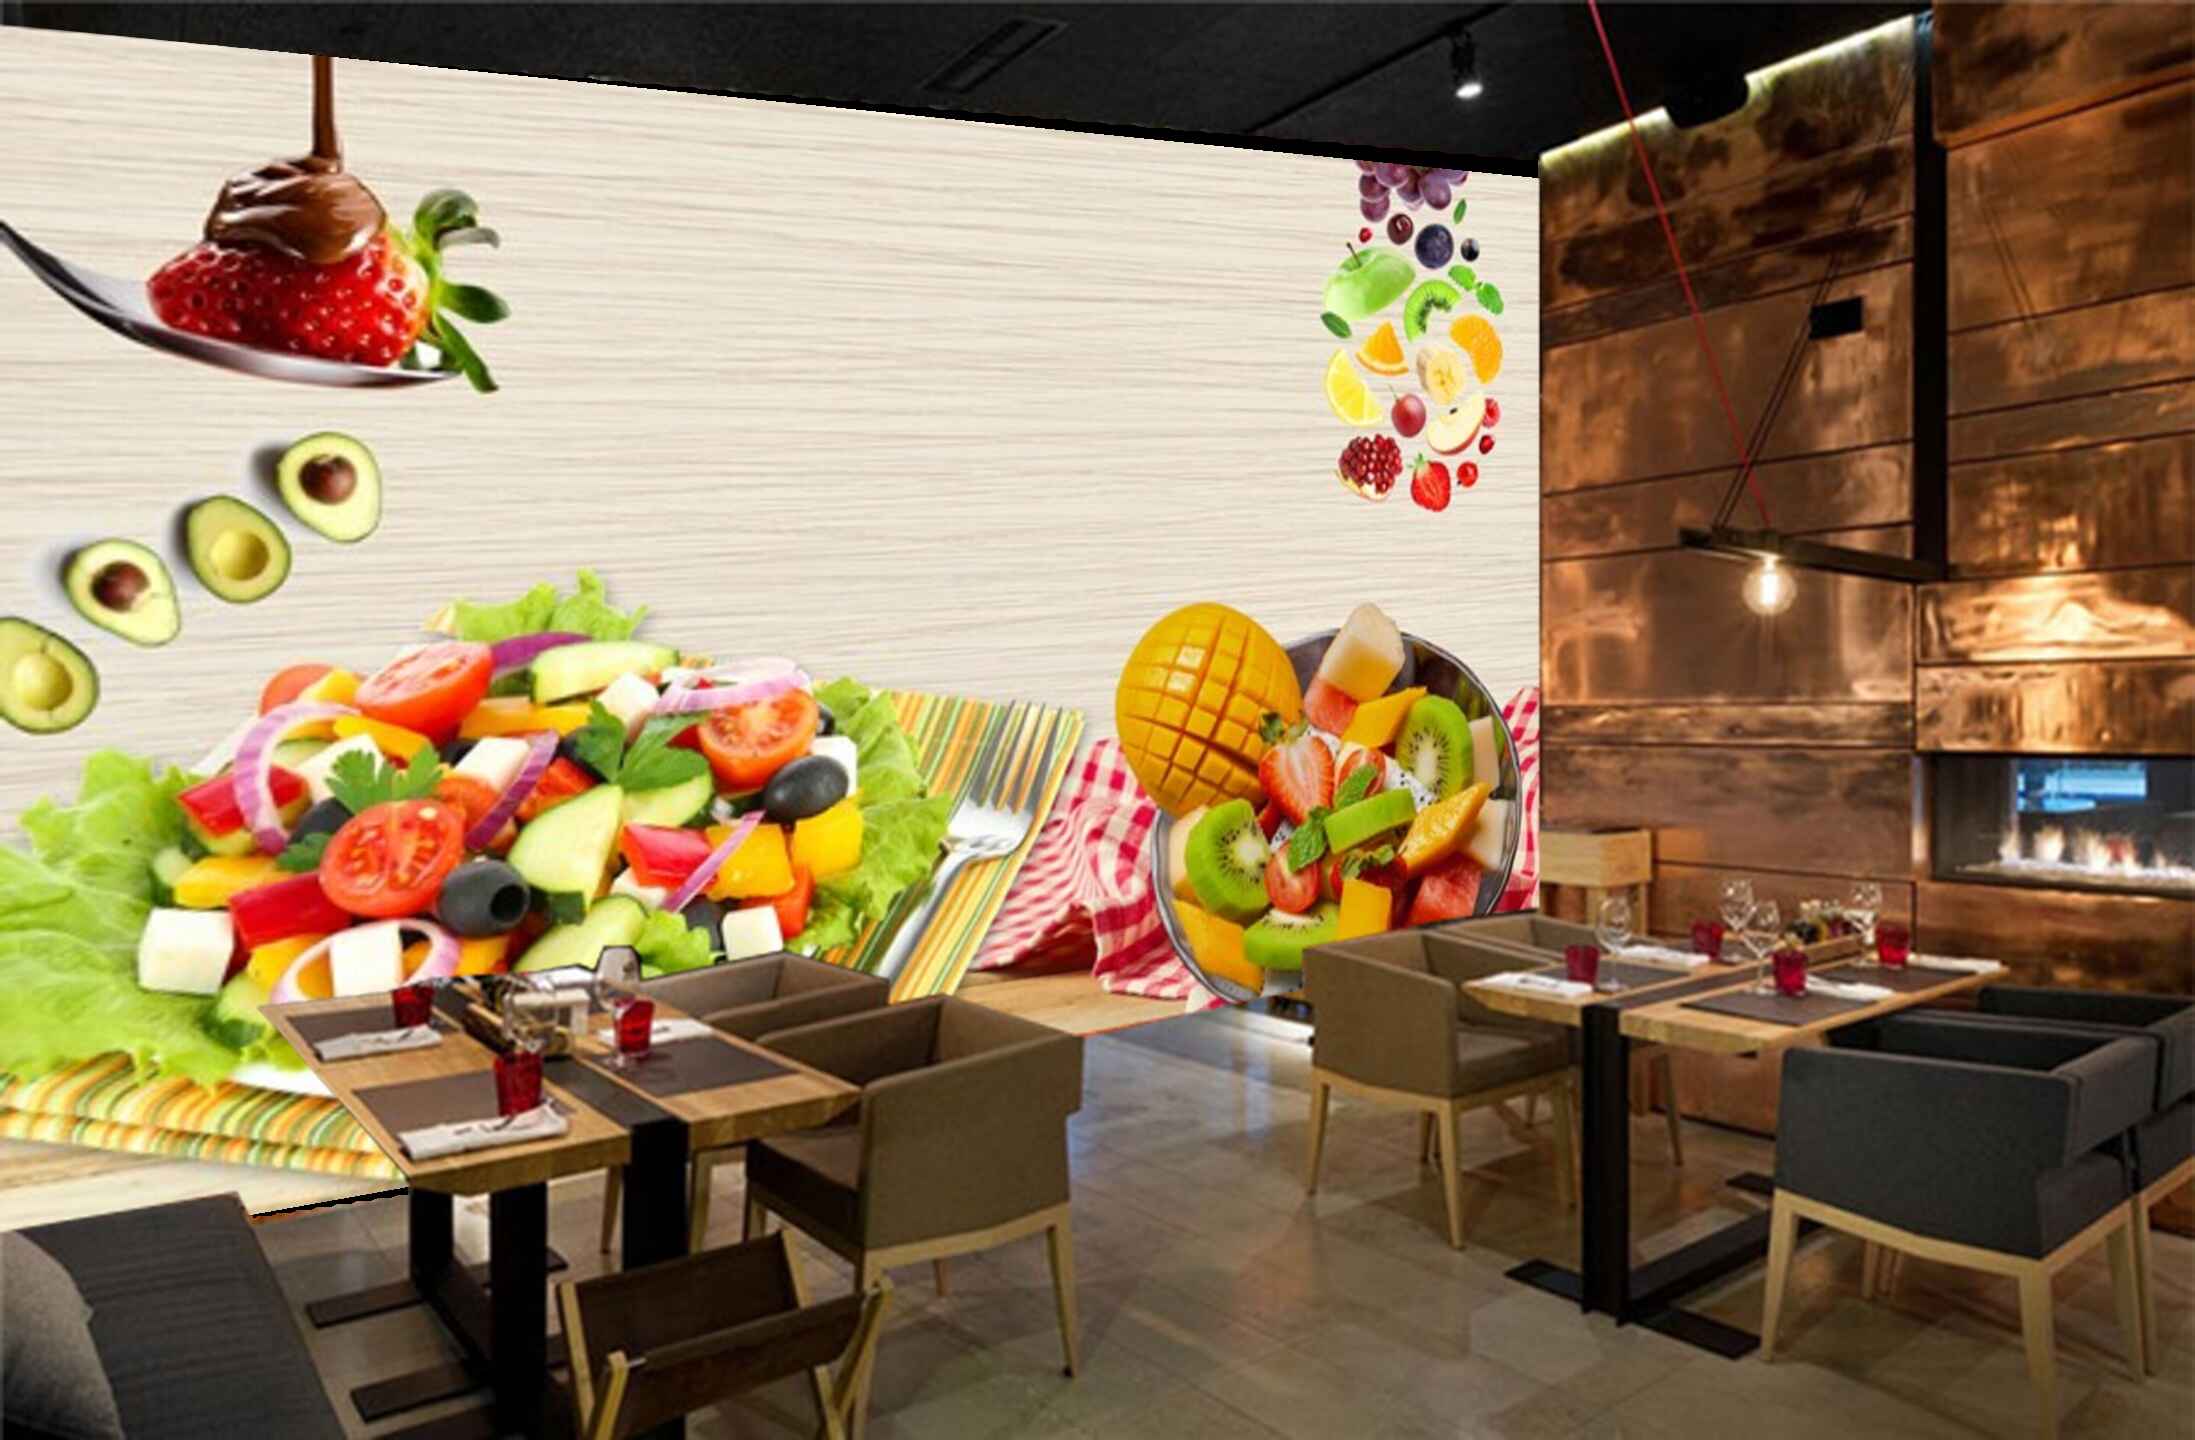 Avikalp MWZ3158 Salads Fruits Avacados Strawberries HD Wallpaper for Cafe Restaurant